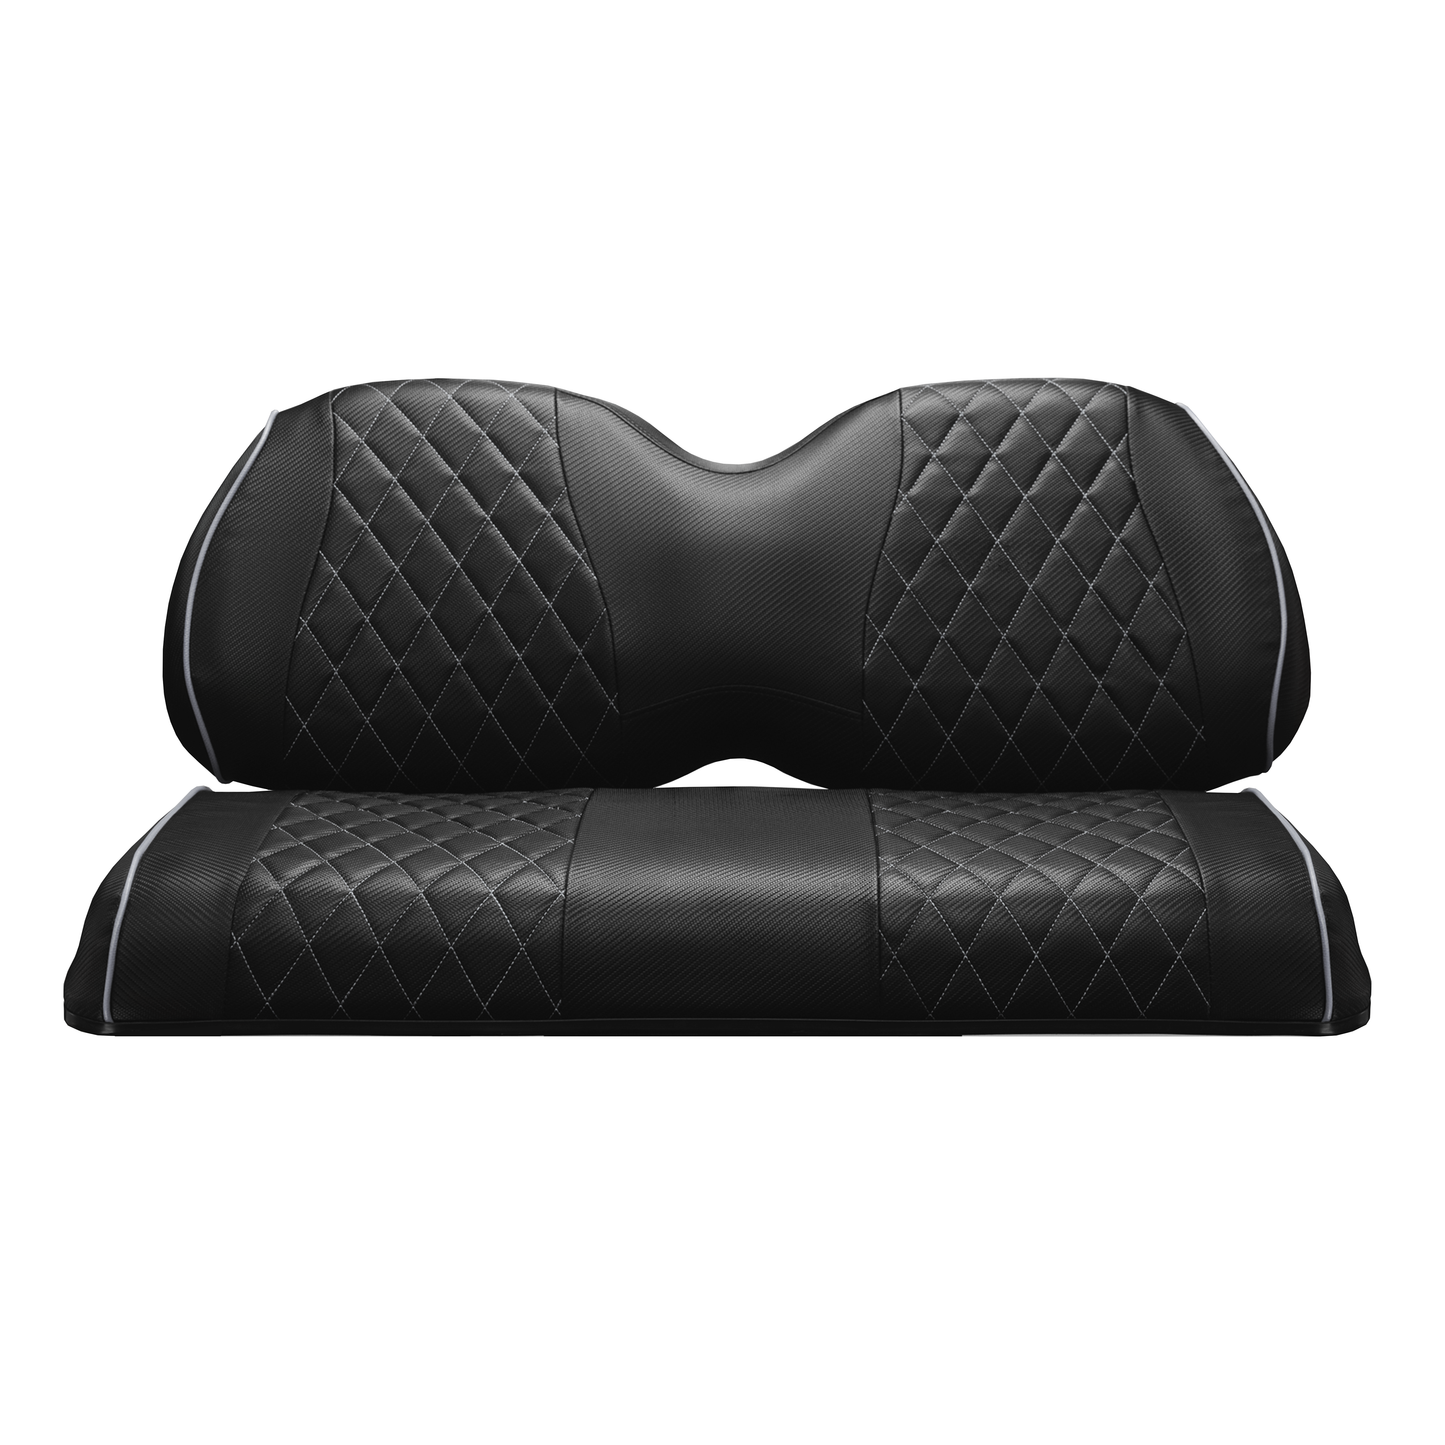 EZGO TXT/RXV - EZON "No Staples Needed" A2Z Diamond Stitched Seat Covers